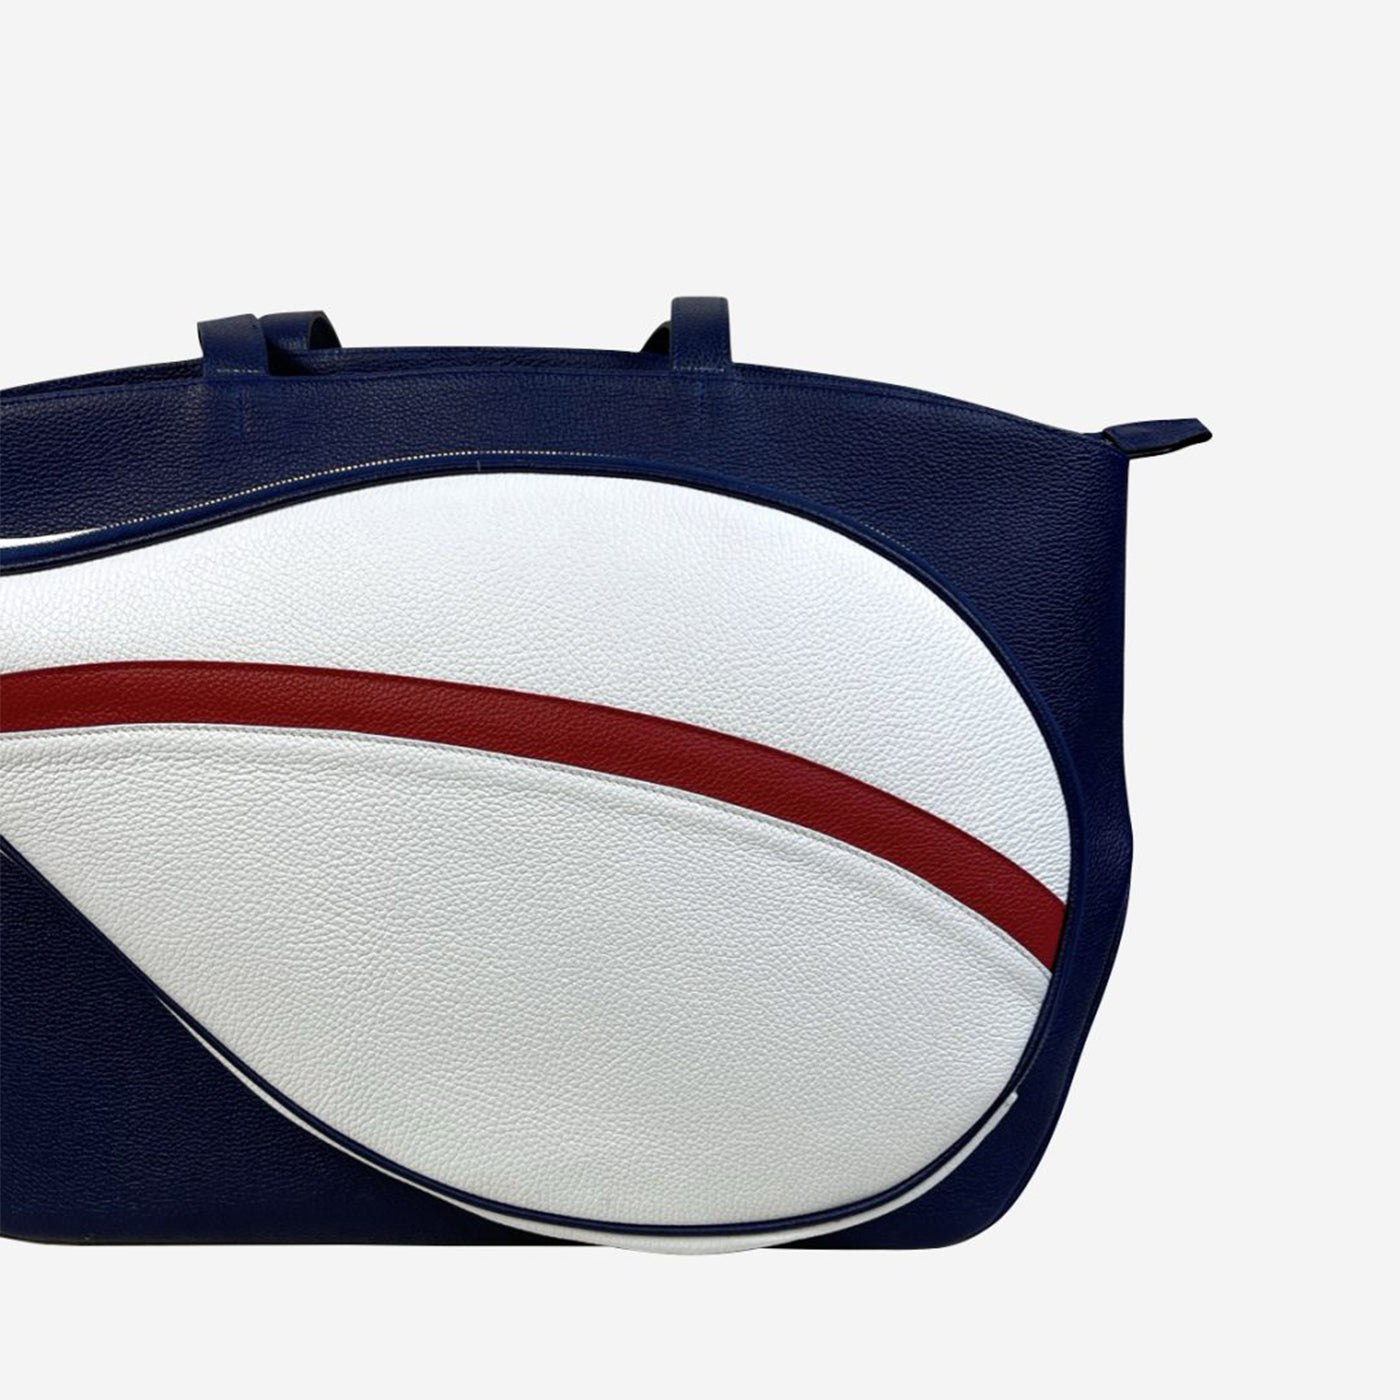 Bolsa de deporte azul/roja/blanca con bolsillo en forma de raqueta de tenis - Vista alternativa 1